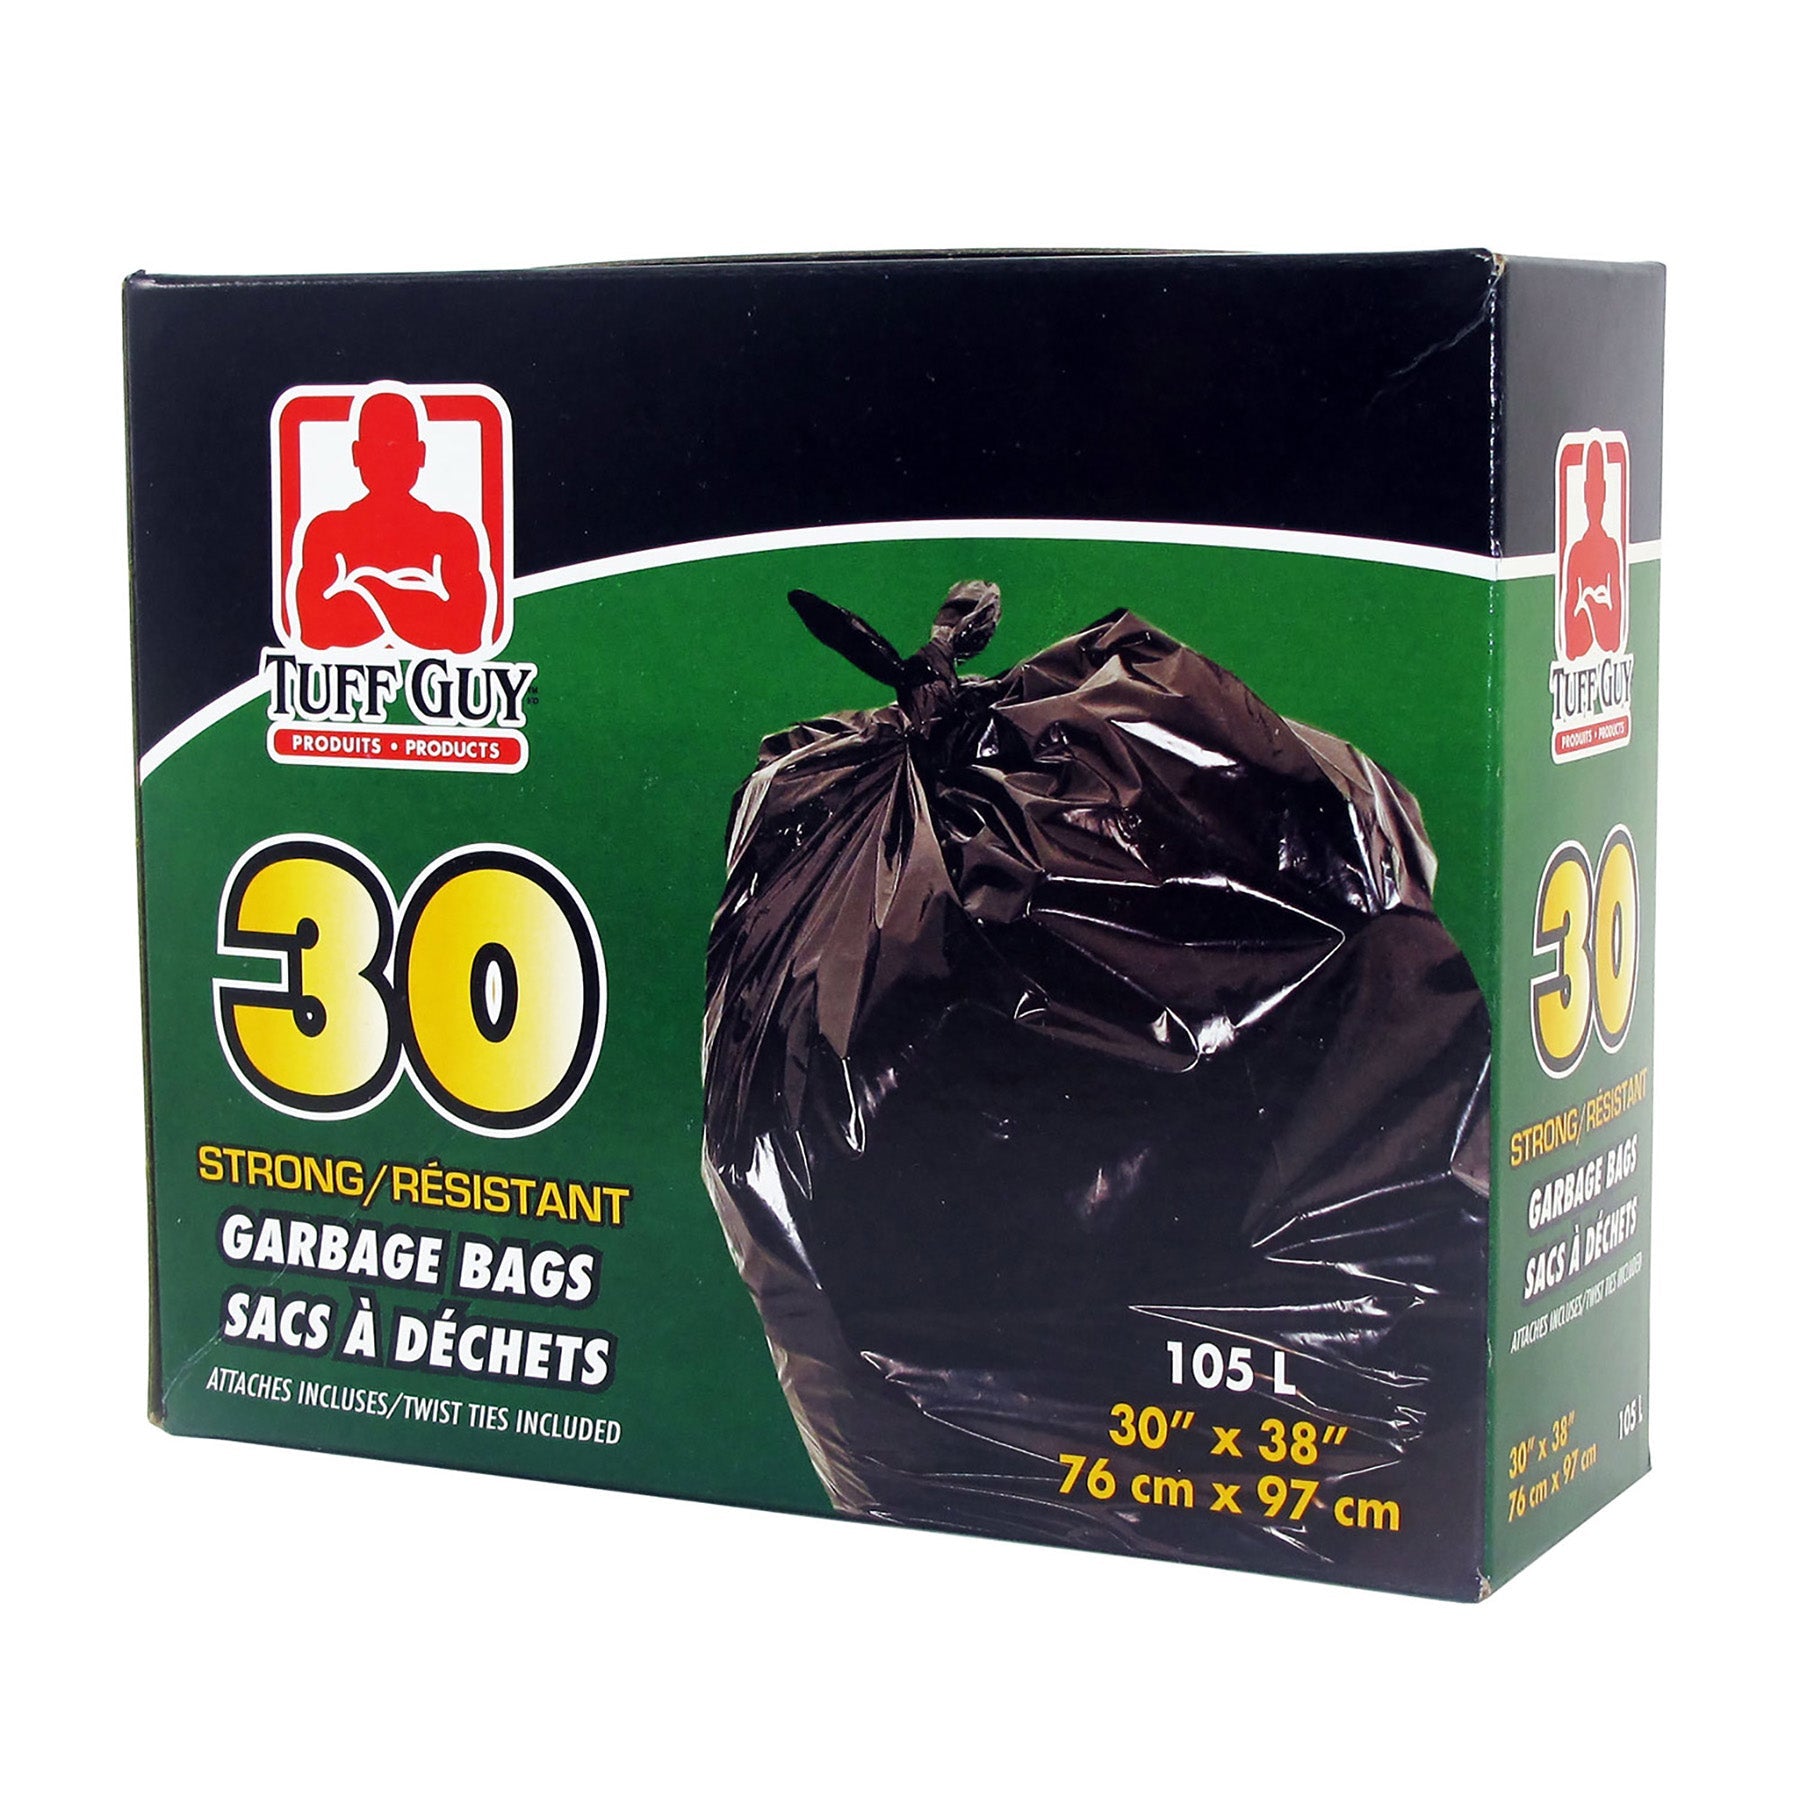 Tuff Guy 30 Black Garbage Bags 30x38in 105L